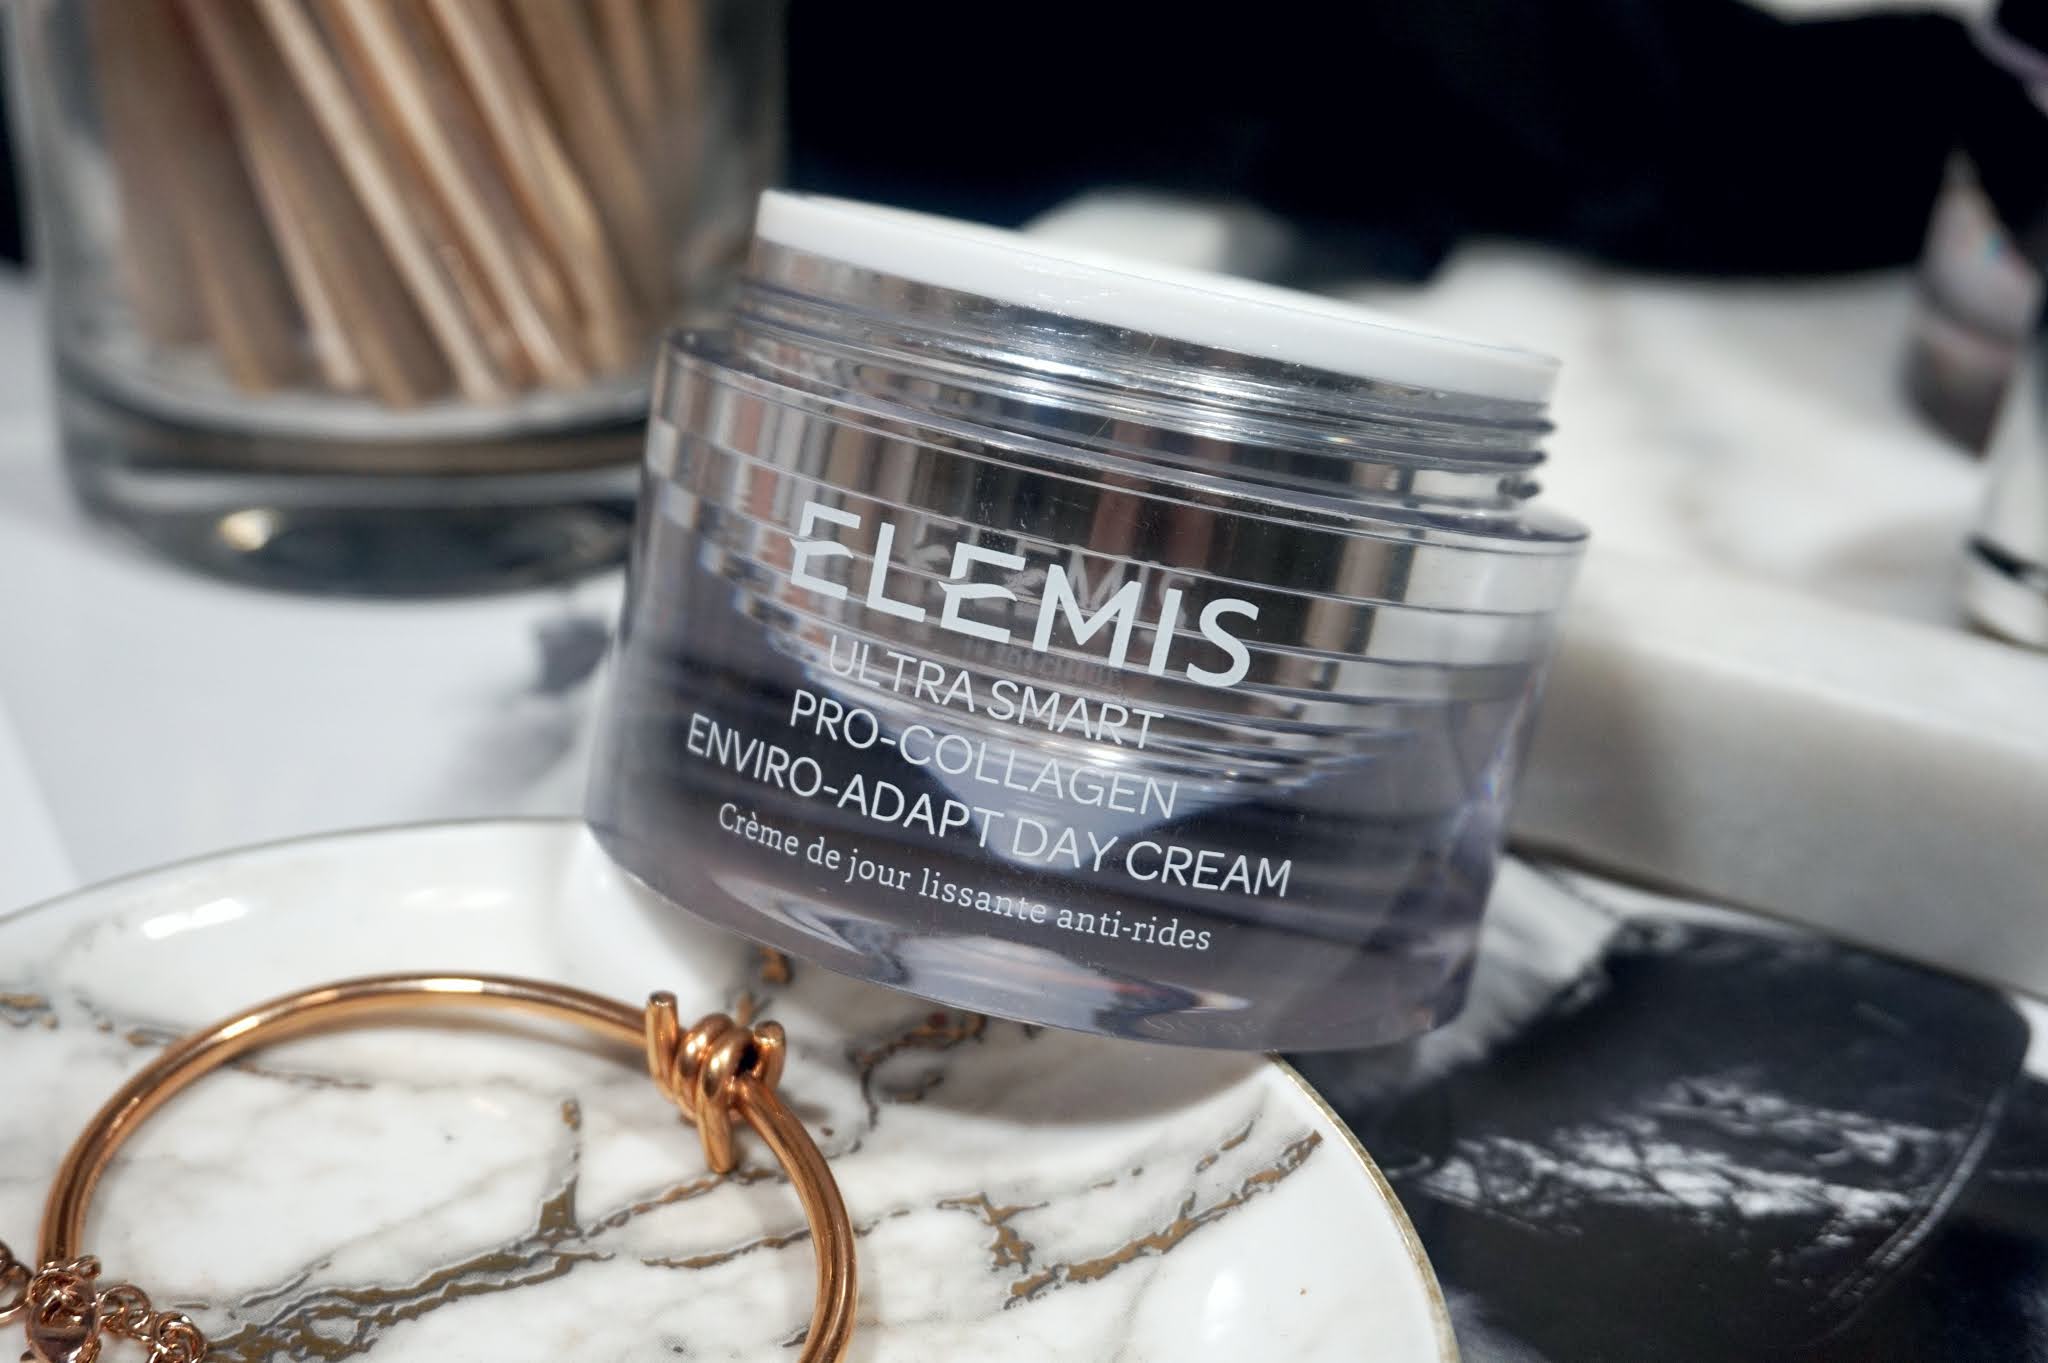 Elemis ULTRA SMART Pro-Collagen Enviro-Adapt Day Cream Review